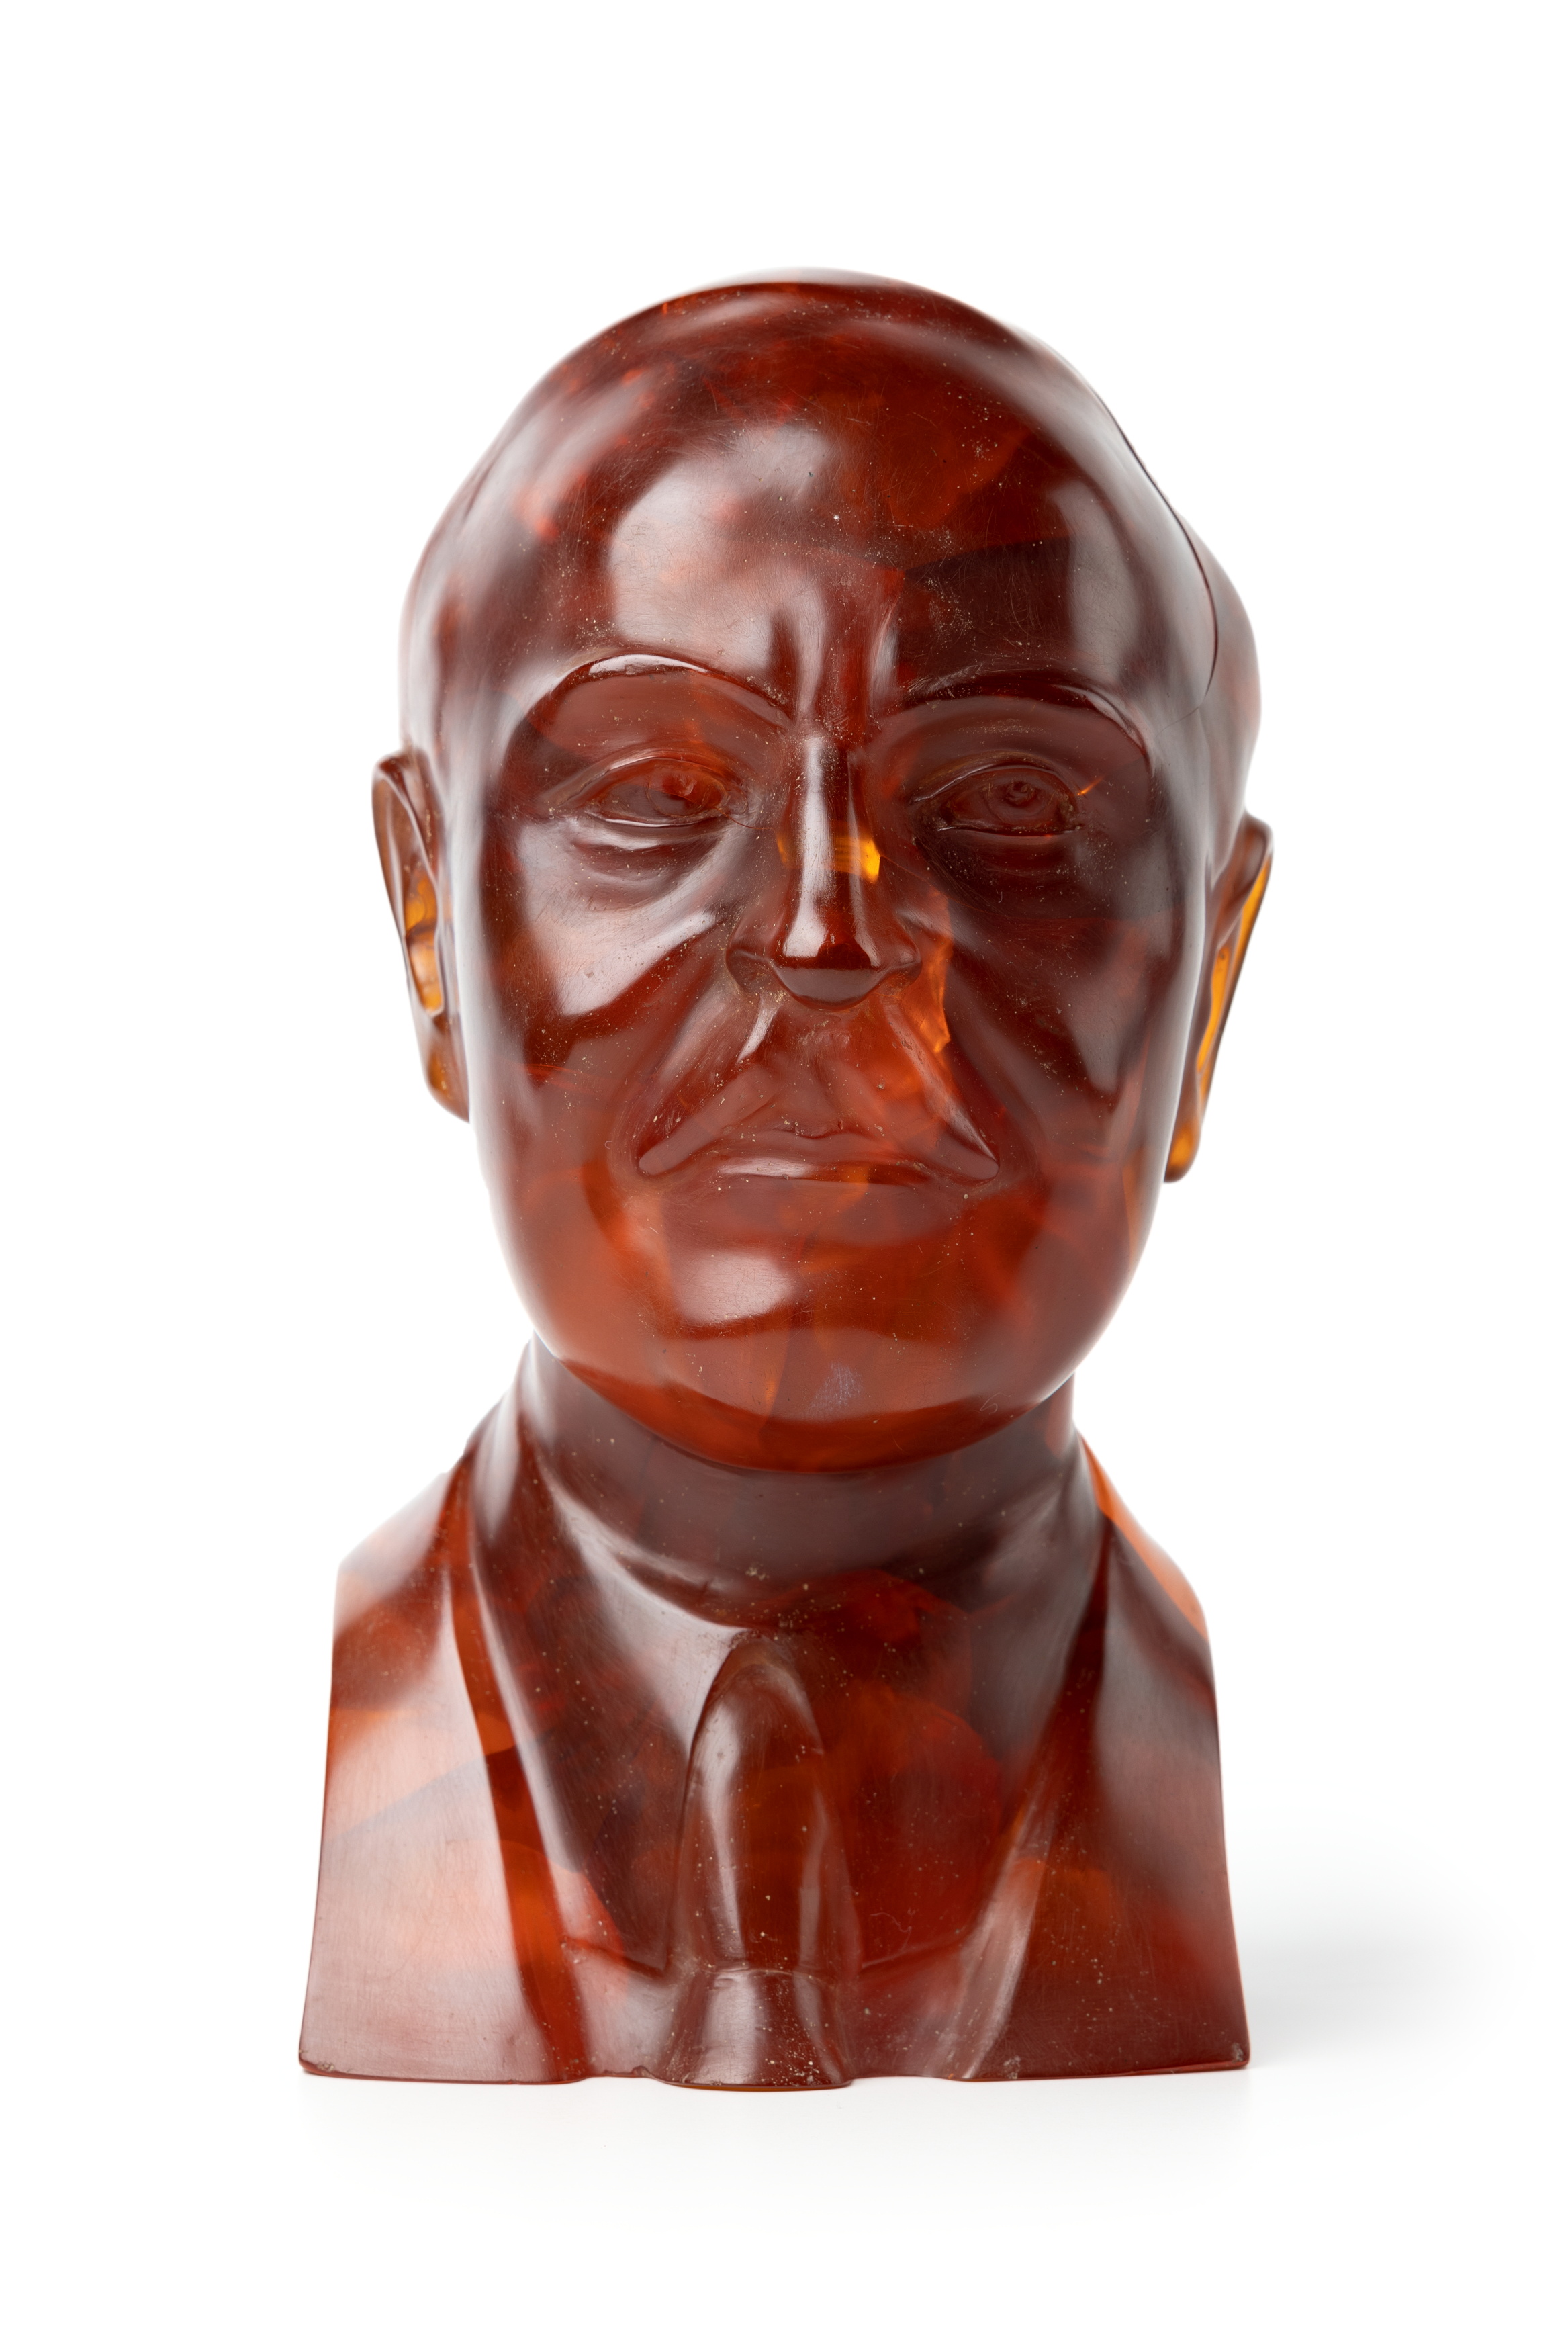 Bakelite bust of Leo Hendrik Baekeland